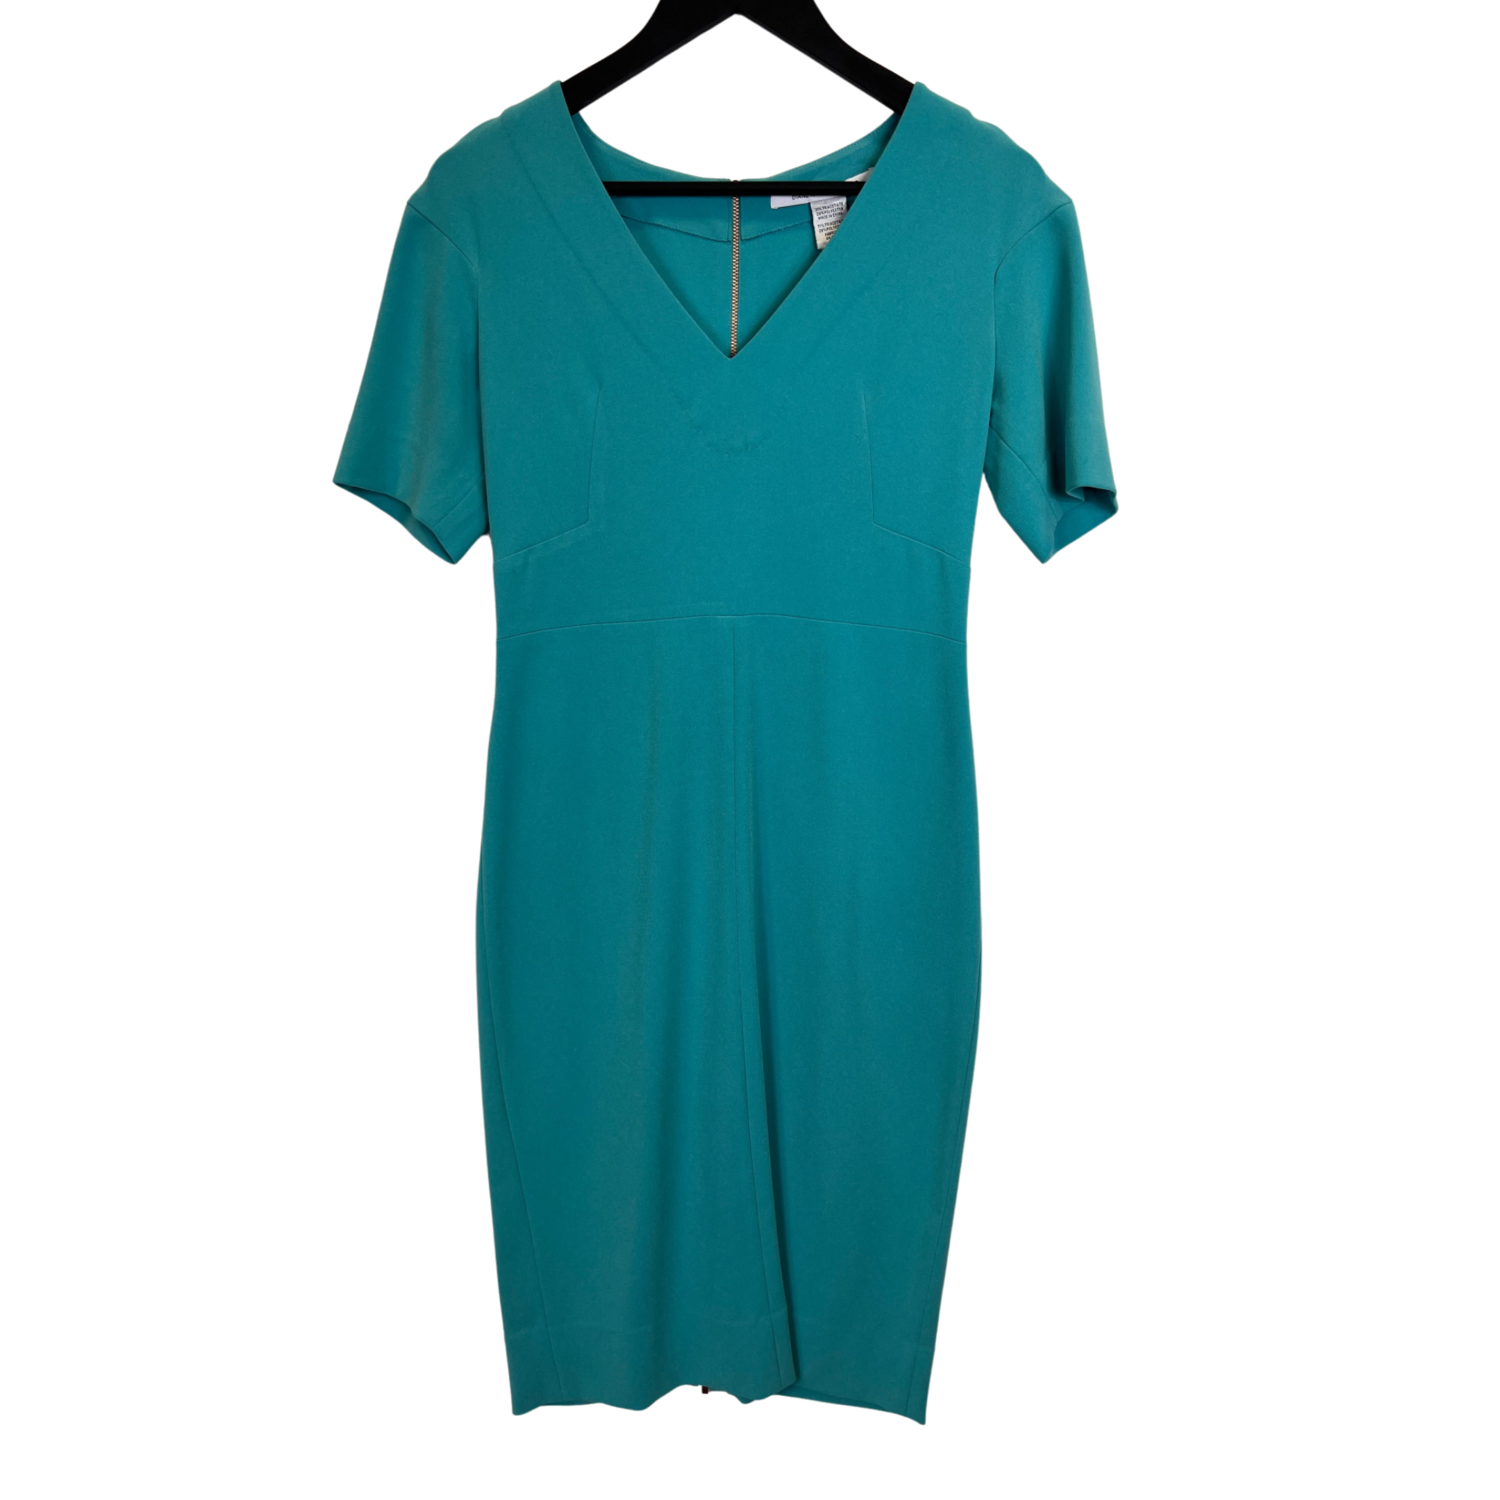 Synthetic Dress Diane von Furstenberg - US 8, buy pre-owned at 70 EUR